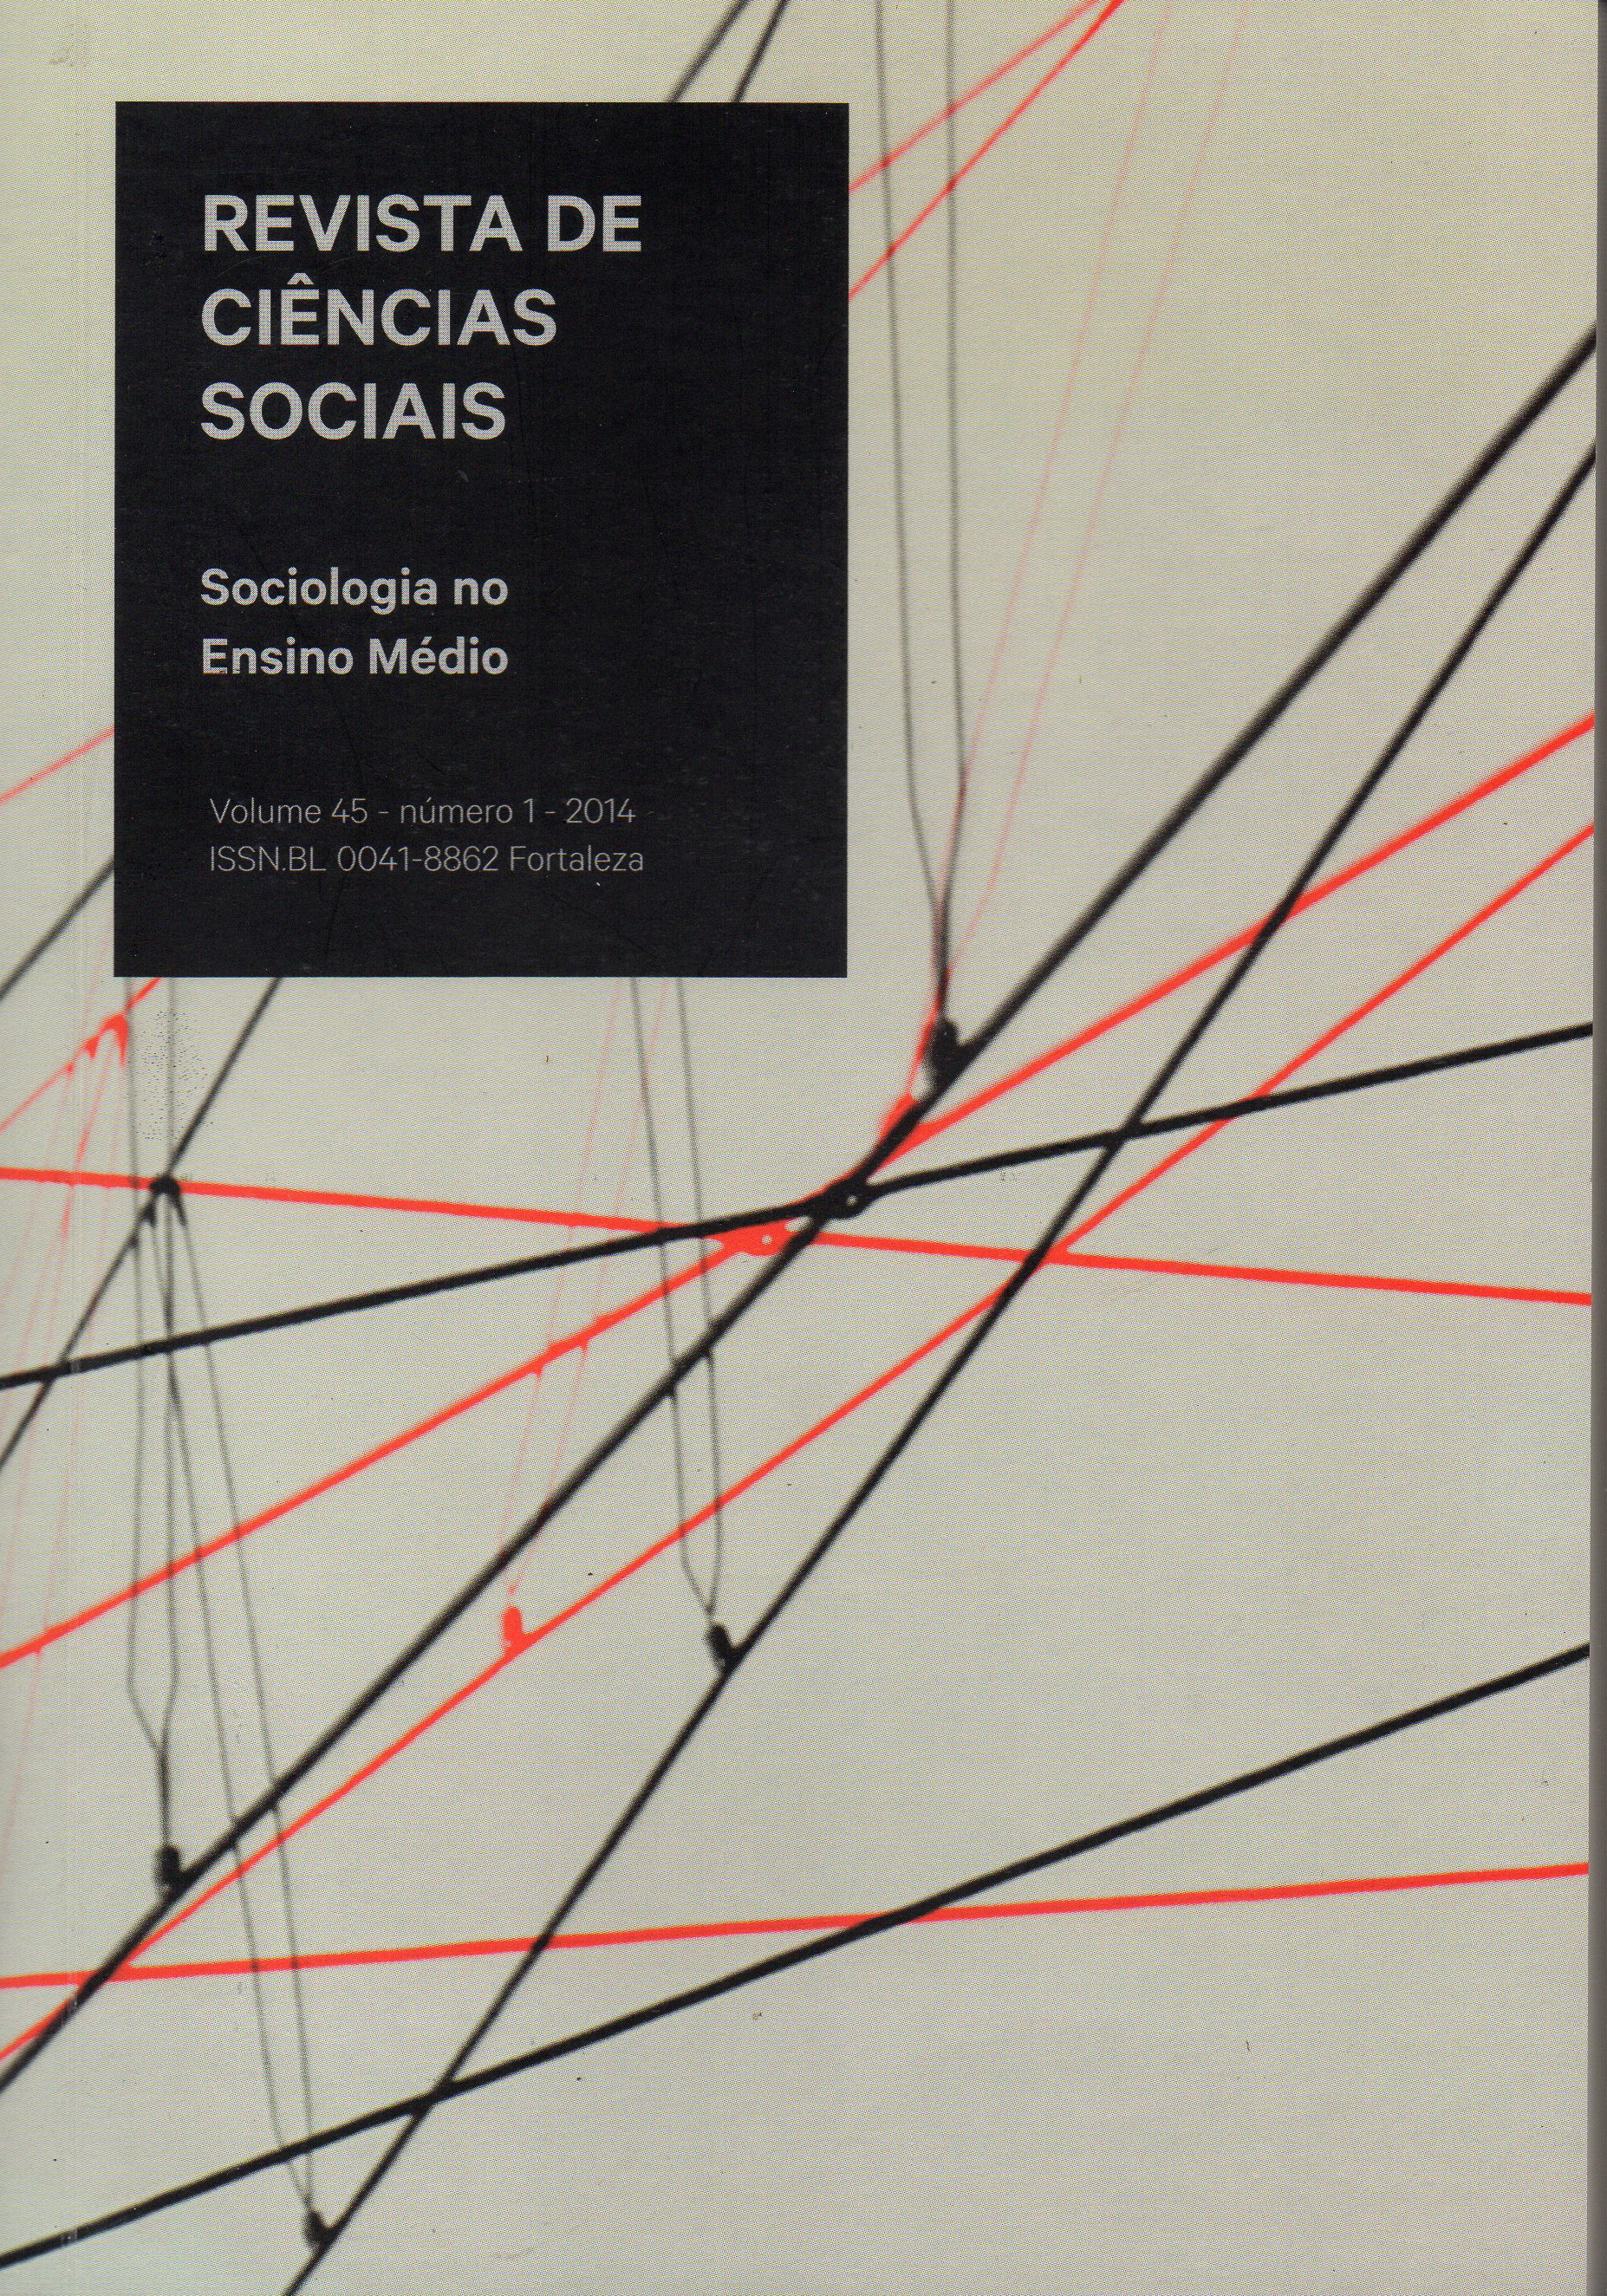 					Visualizar v. 45 n. 1 (2014): Sociologia no Ensino Médio
				